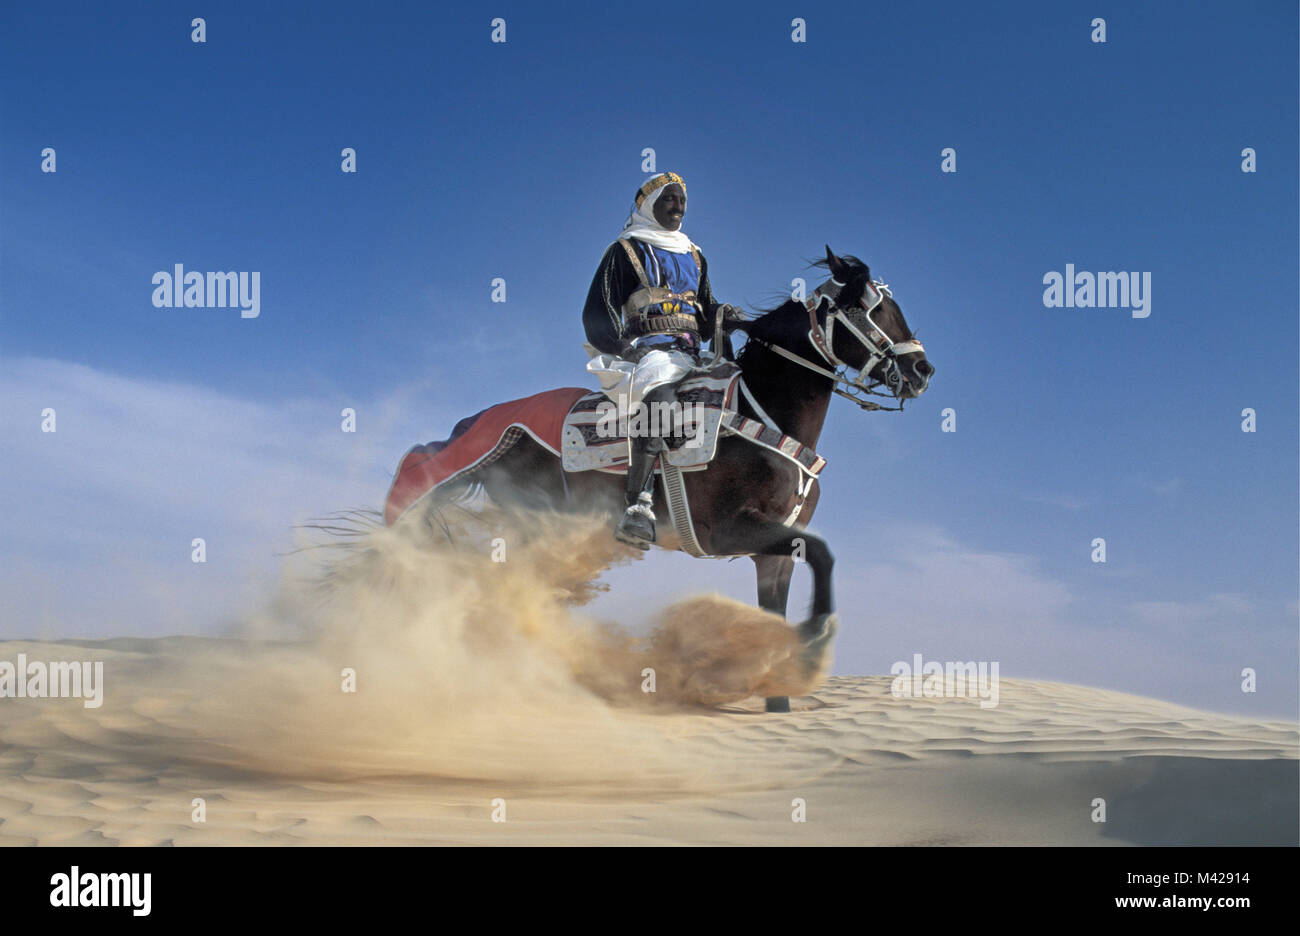 Tunisia. Douz oasis. Sahara desert. Man riding horse,  in sand dunes, trailing sand cloud, dressed for festival. Stock Photo